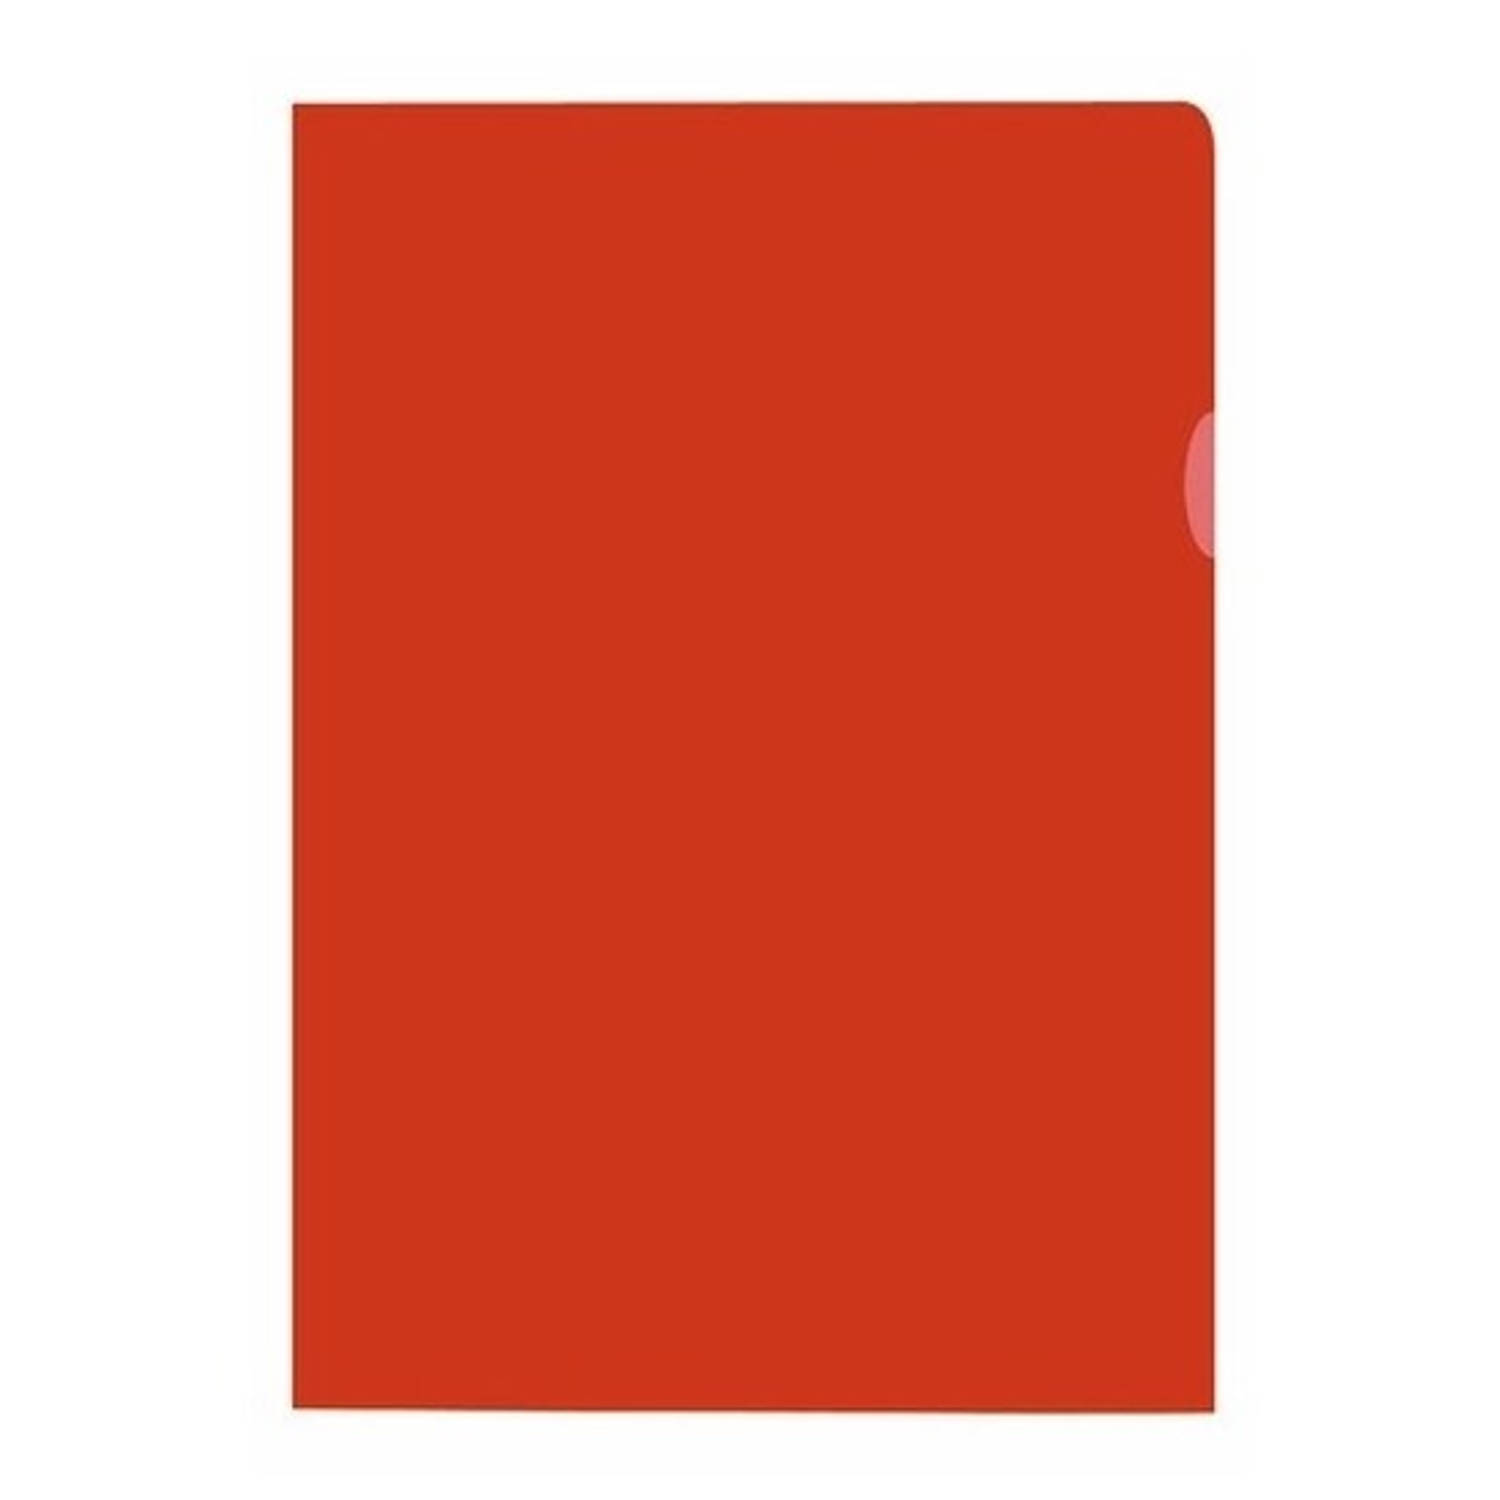 20x Insteekmap rood A4 formaat 21 x 30 cm Opbergmap